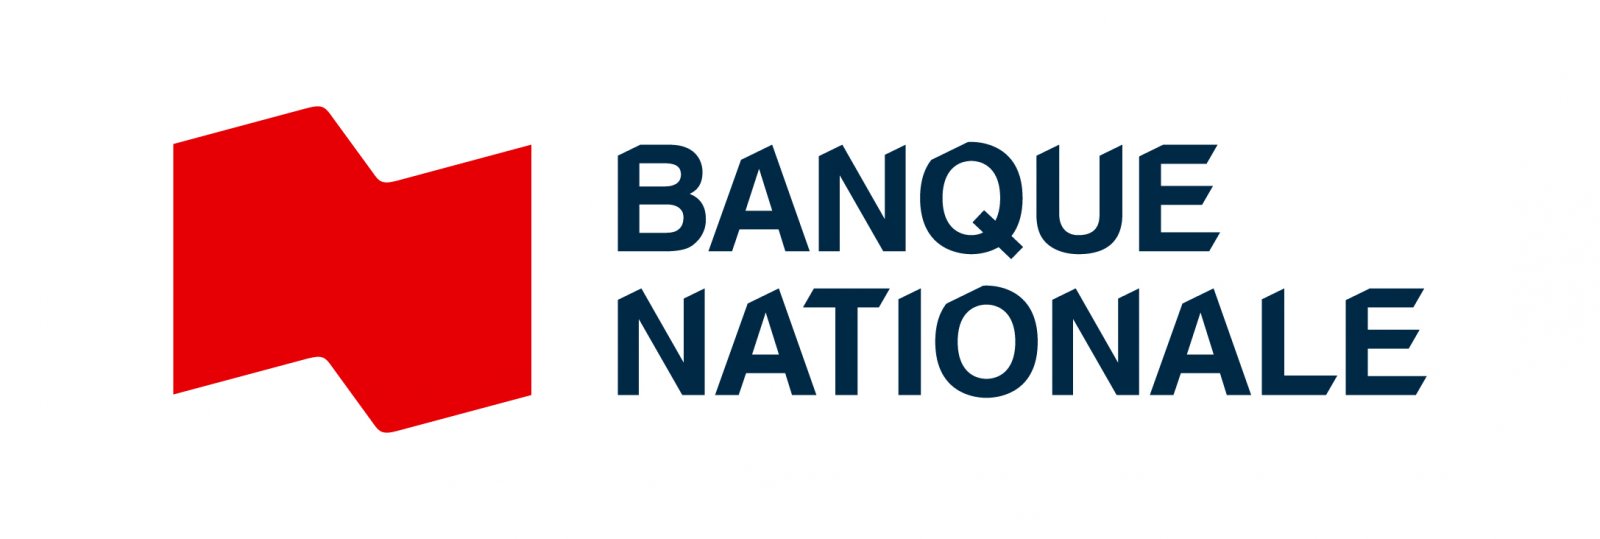 Banque national